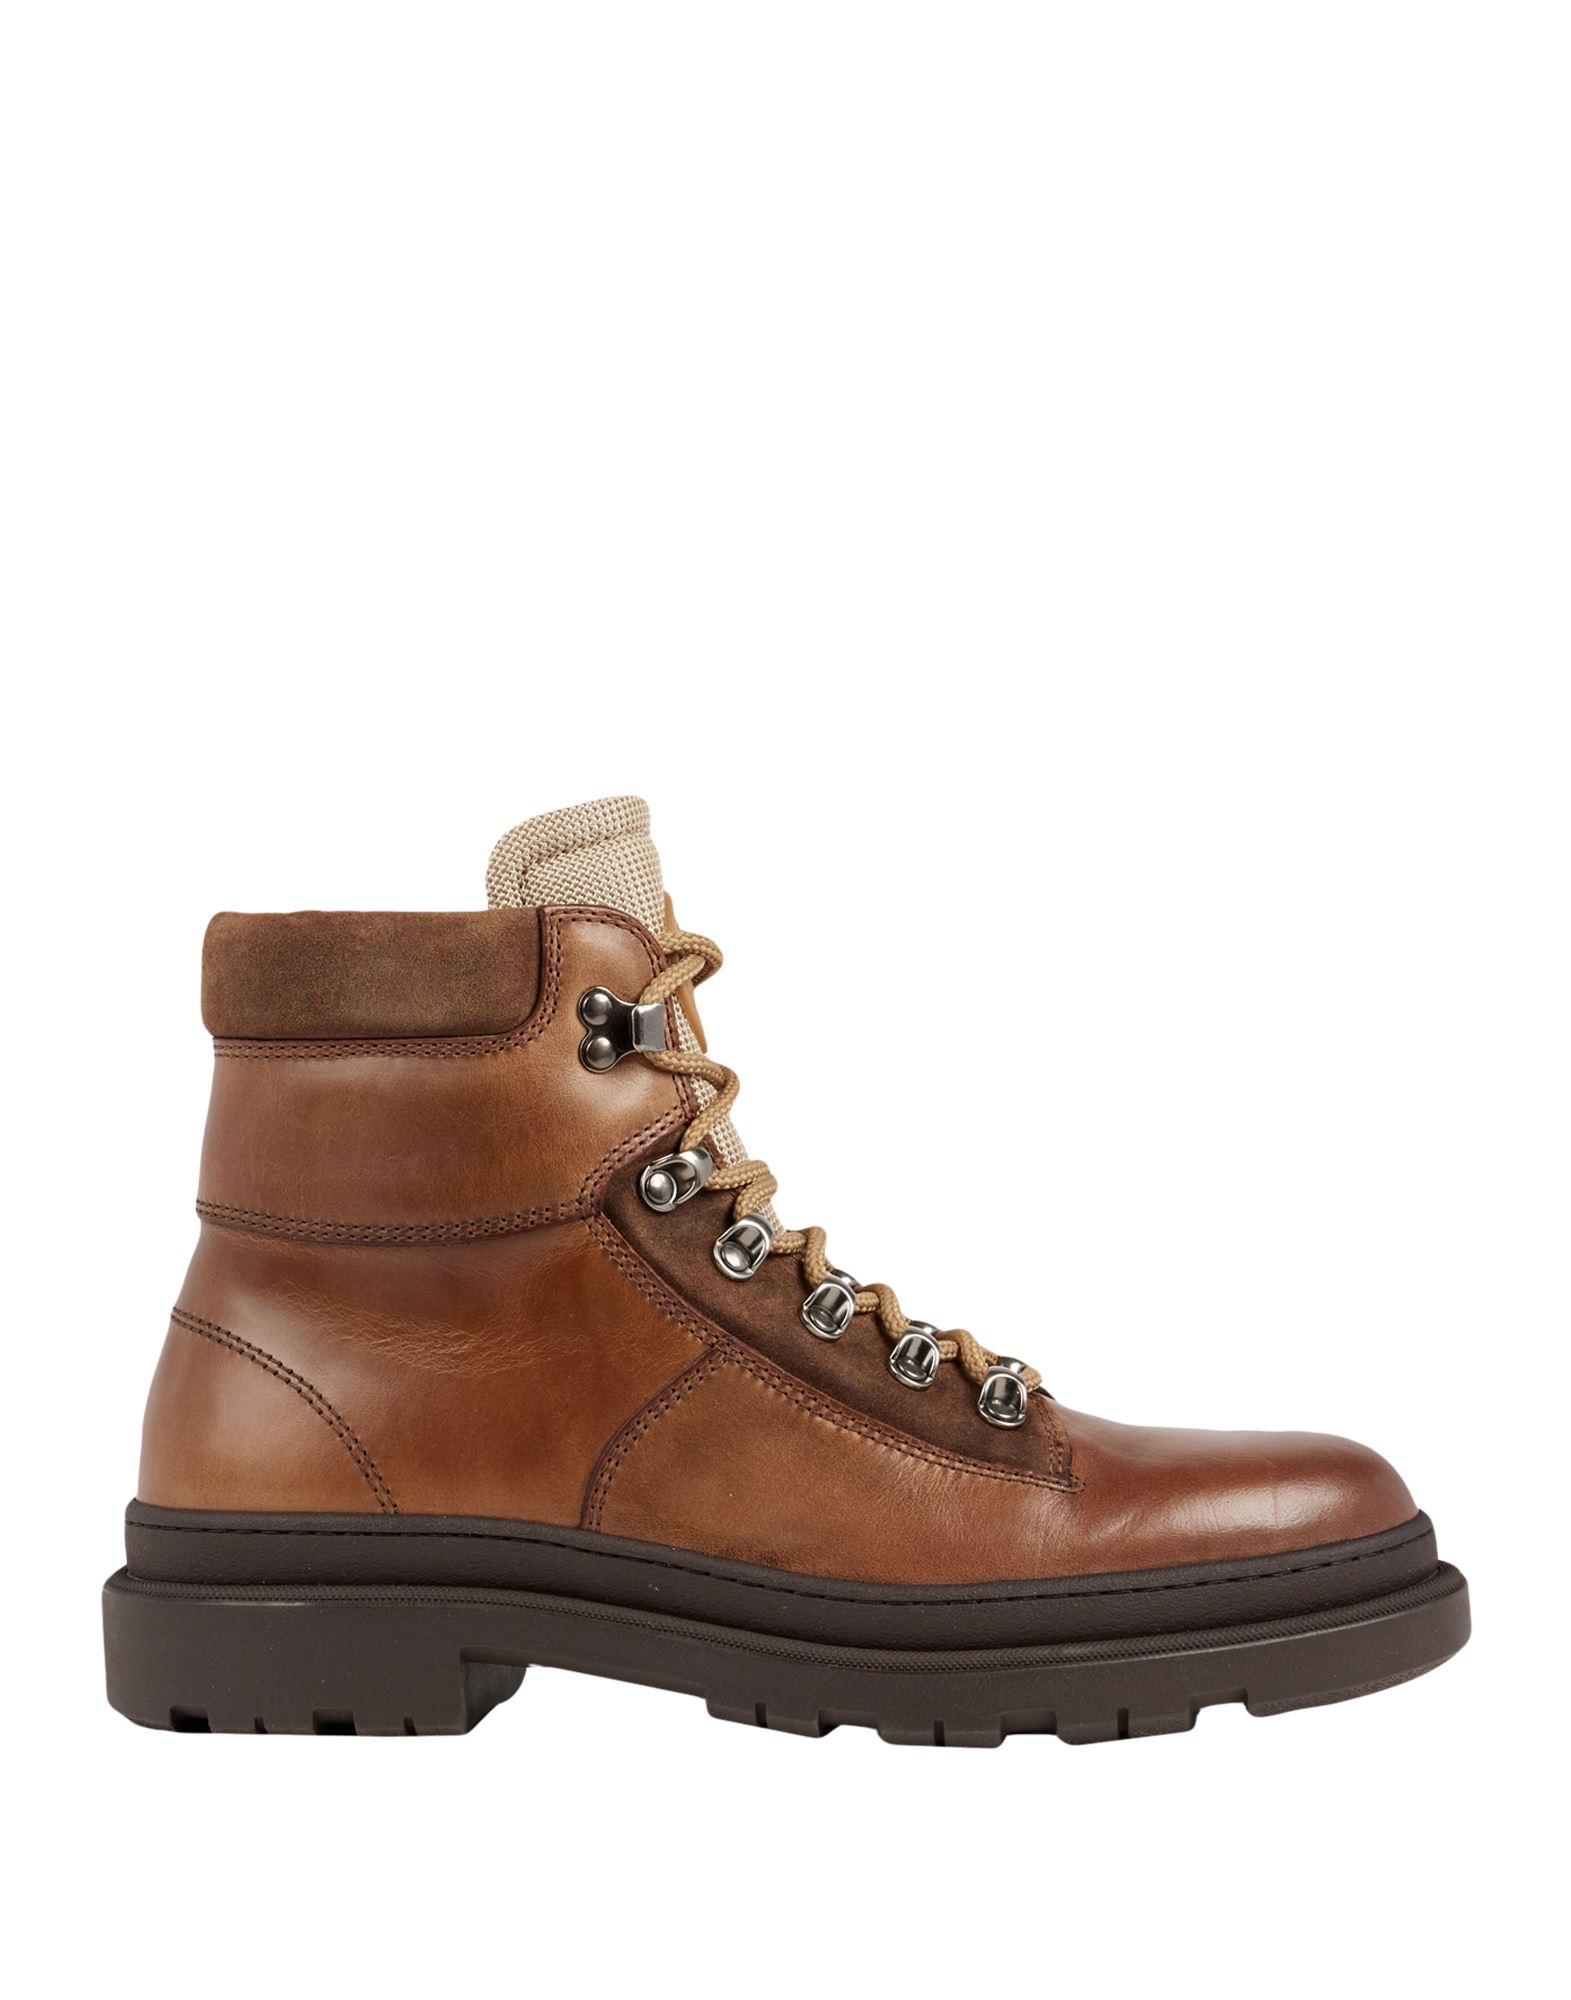 meesteres overschot zaterdag Brunello Cucinelli Ankle Boots In Brown | ModeSens